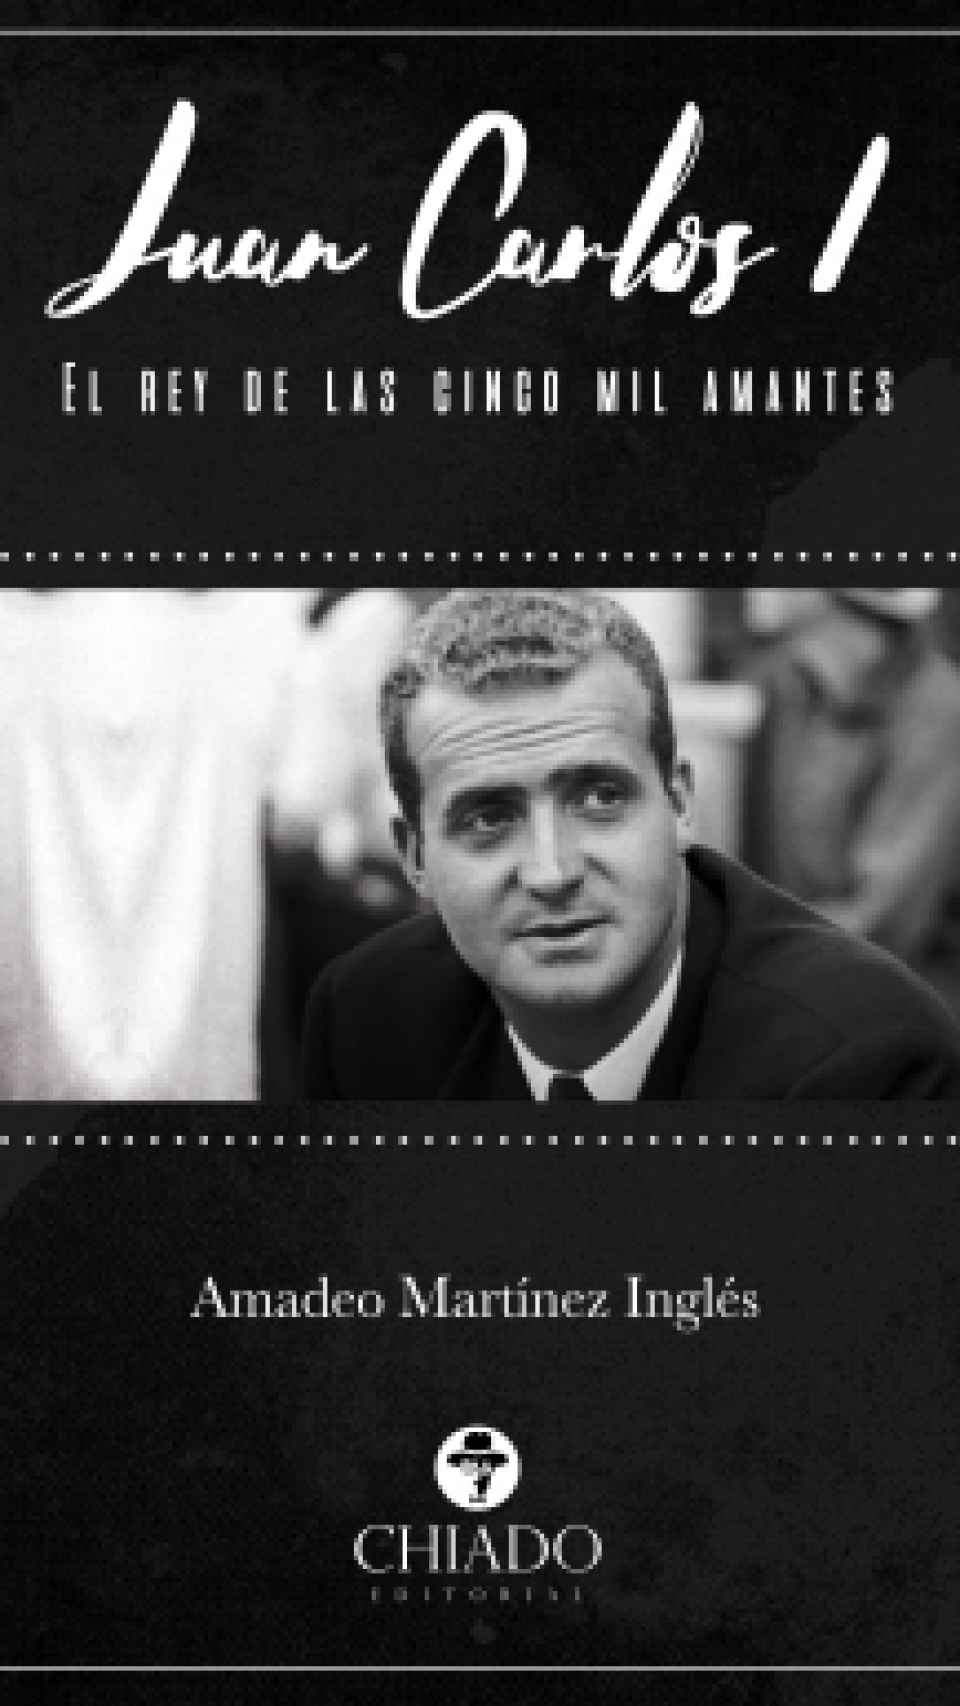 Portada del libro de Amadeo Martínez Inglés.